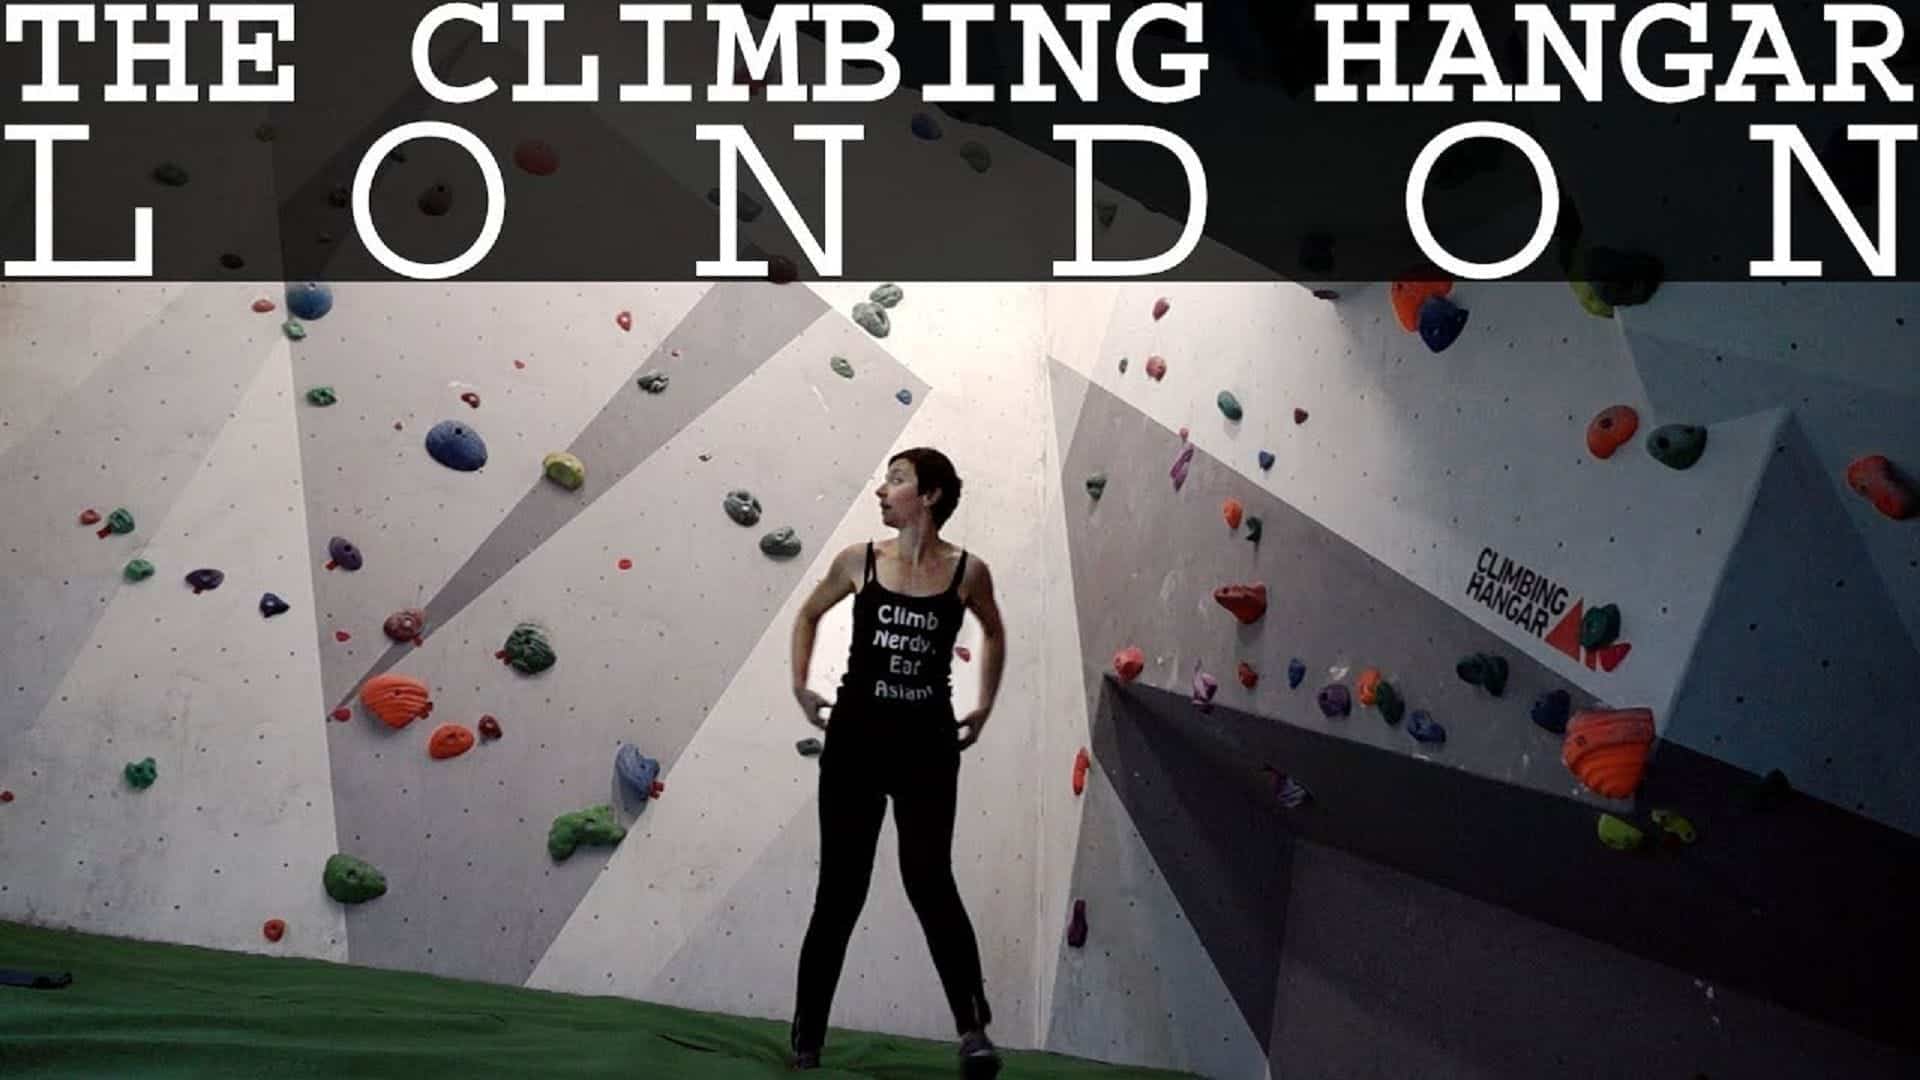 The Climbing Hangar London in UK